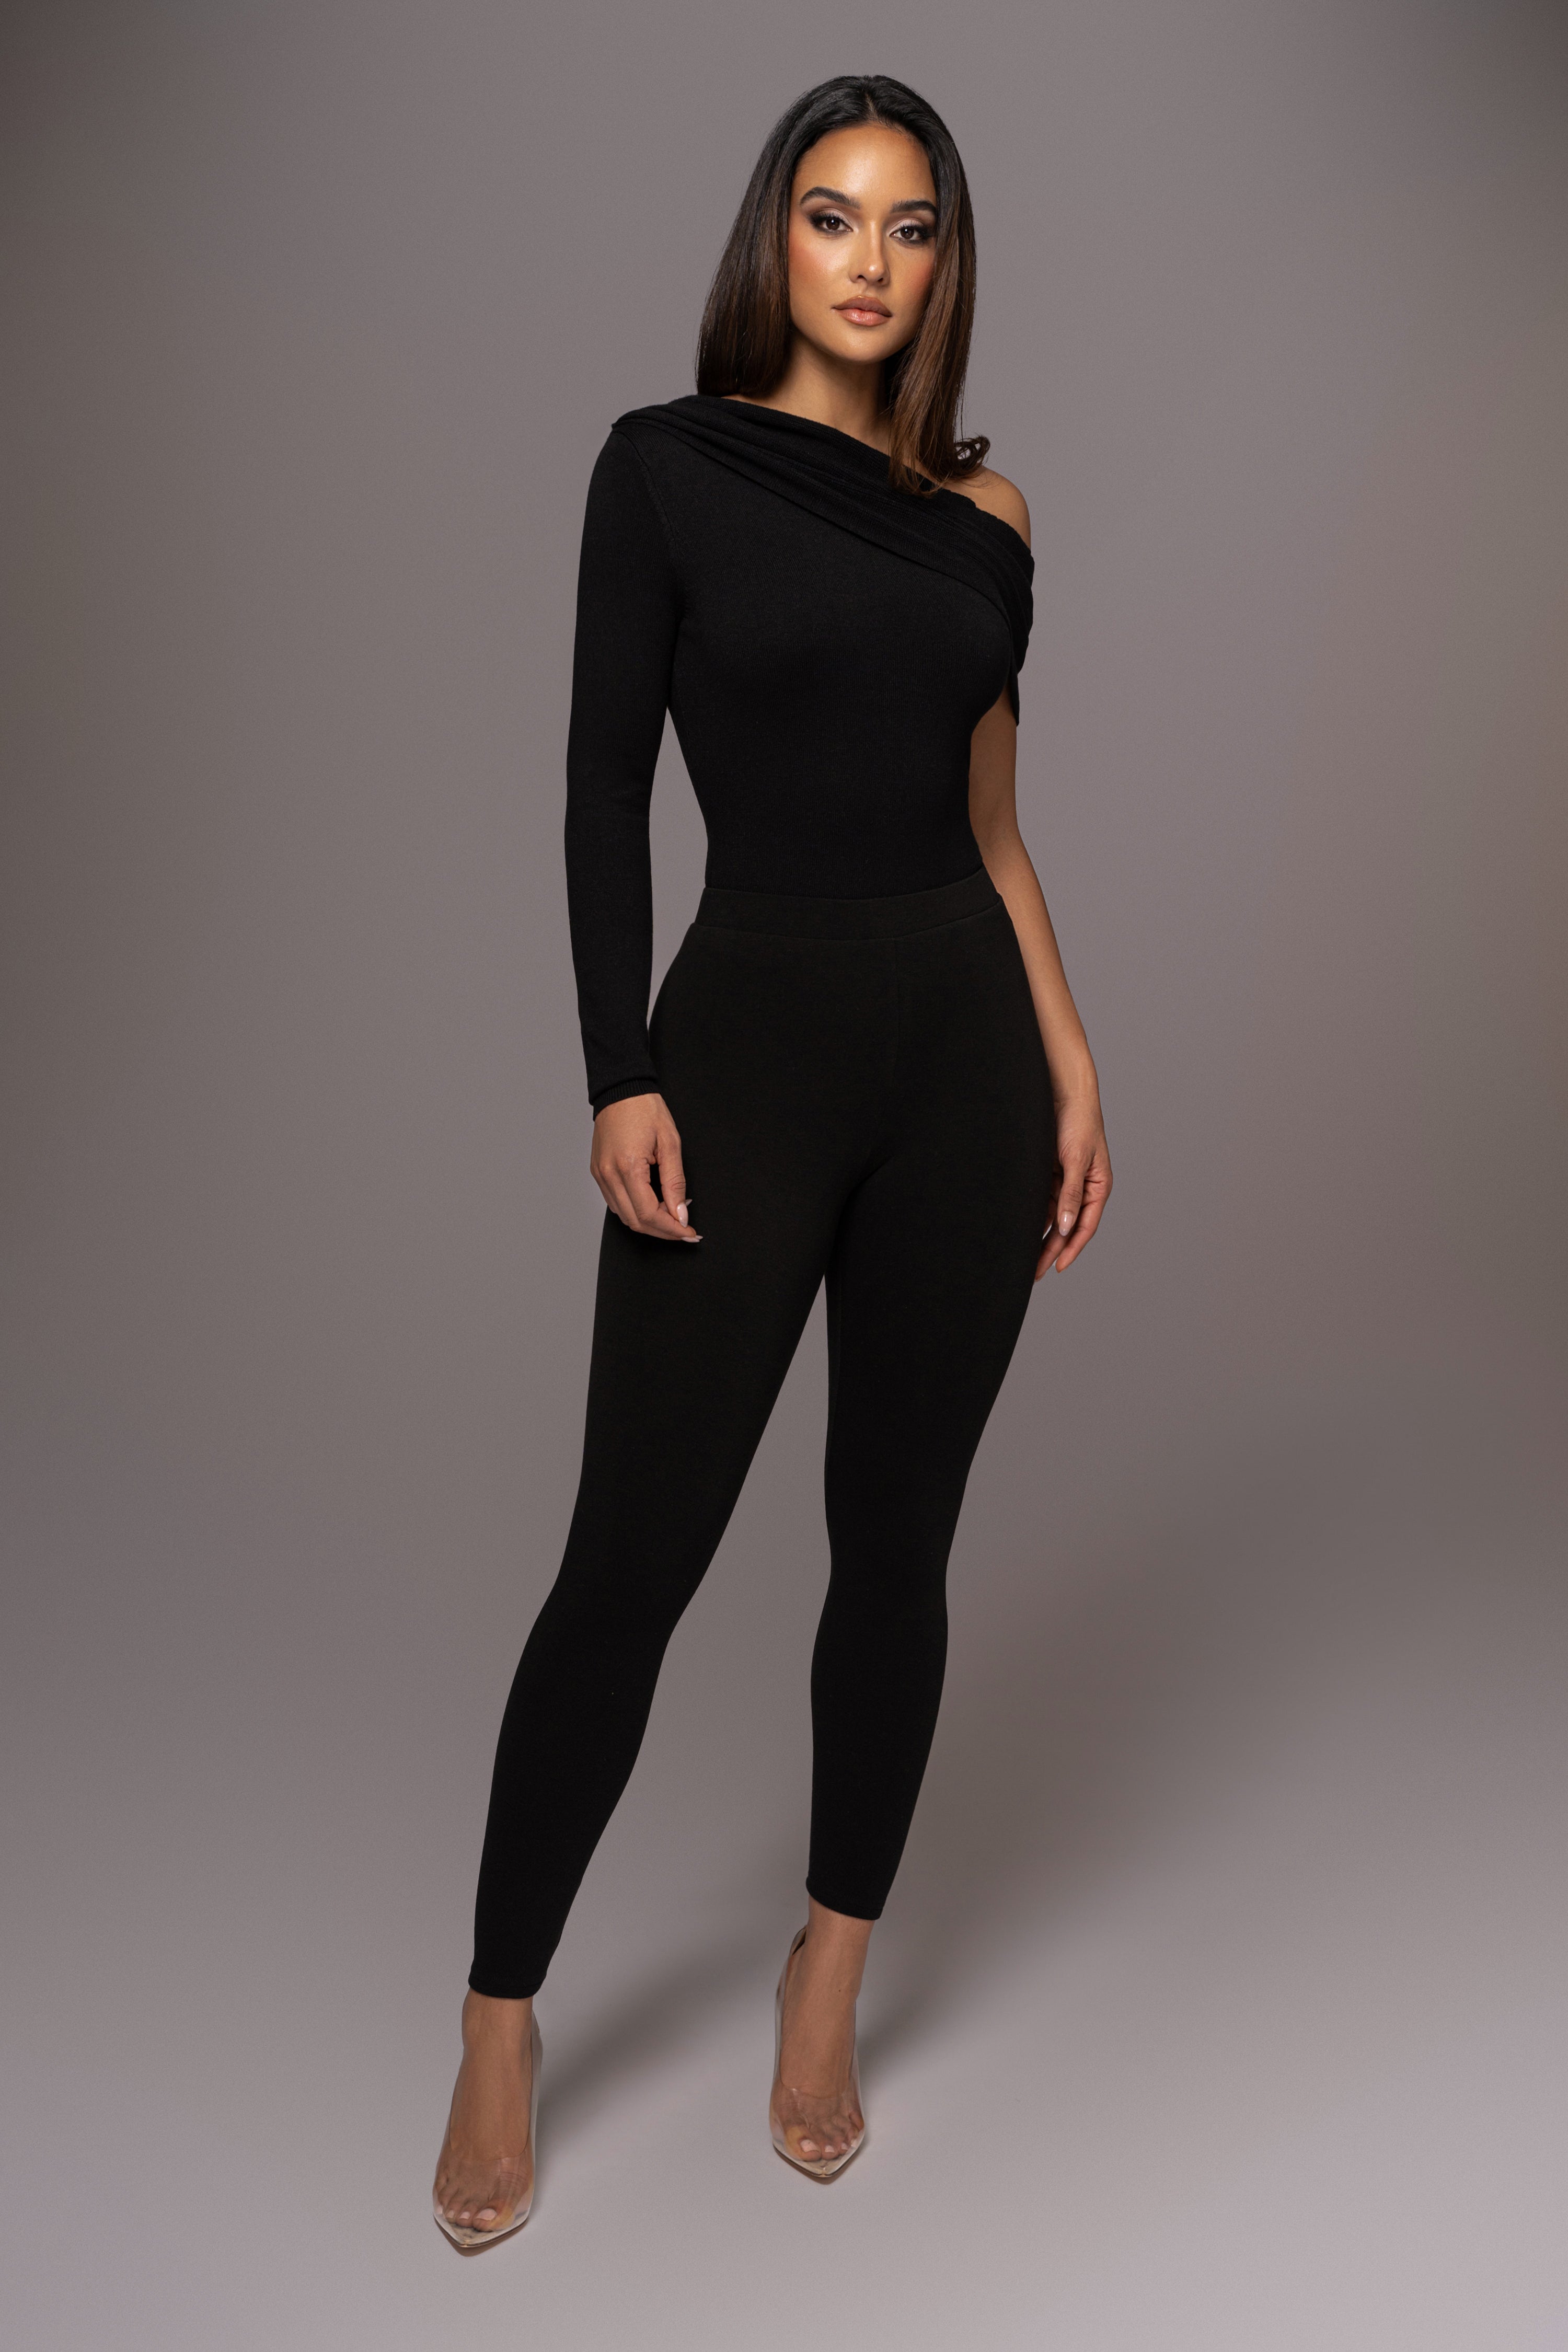 Neeisj Fashion 3D Galaxy Print Girl Leggings Sexy Women High Waist Pants  High Elastic Plus Size Leggings, Black, 3X-Large : : Clothing,  Shoes & Accessories